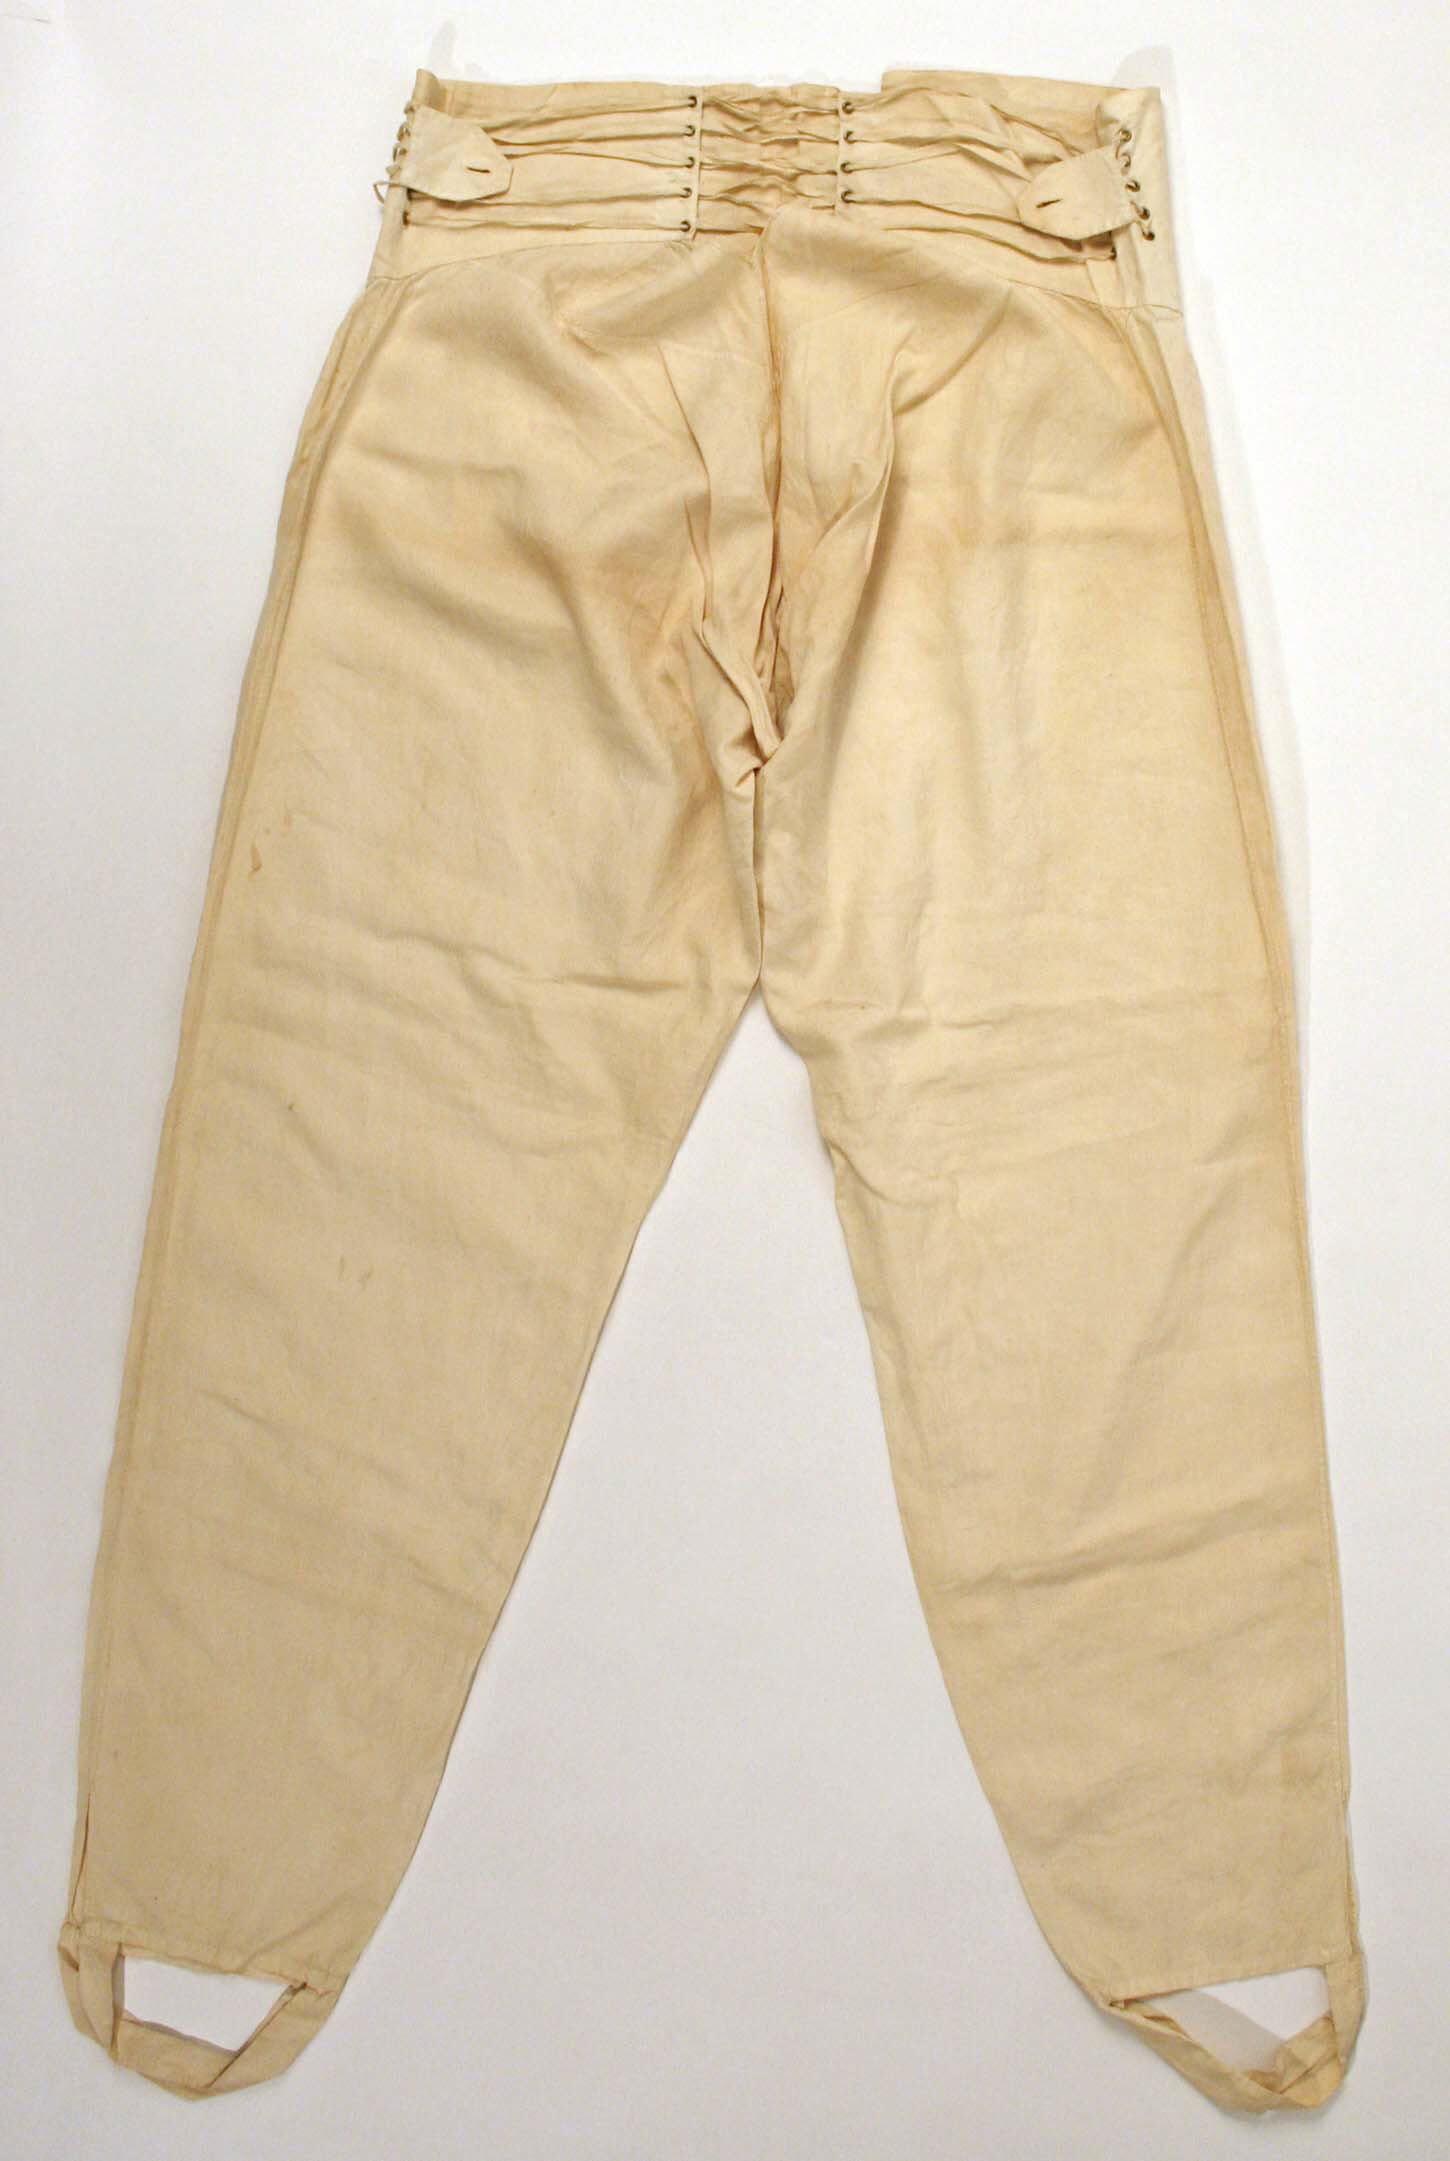 Trousers | American or European | The Metropolitan Museum of Art